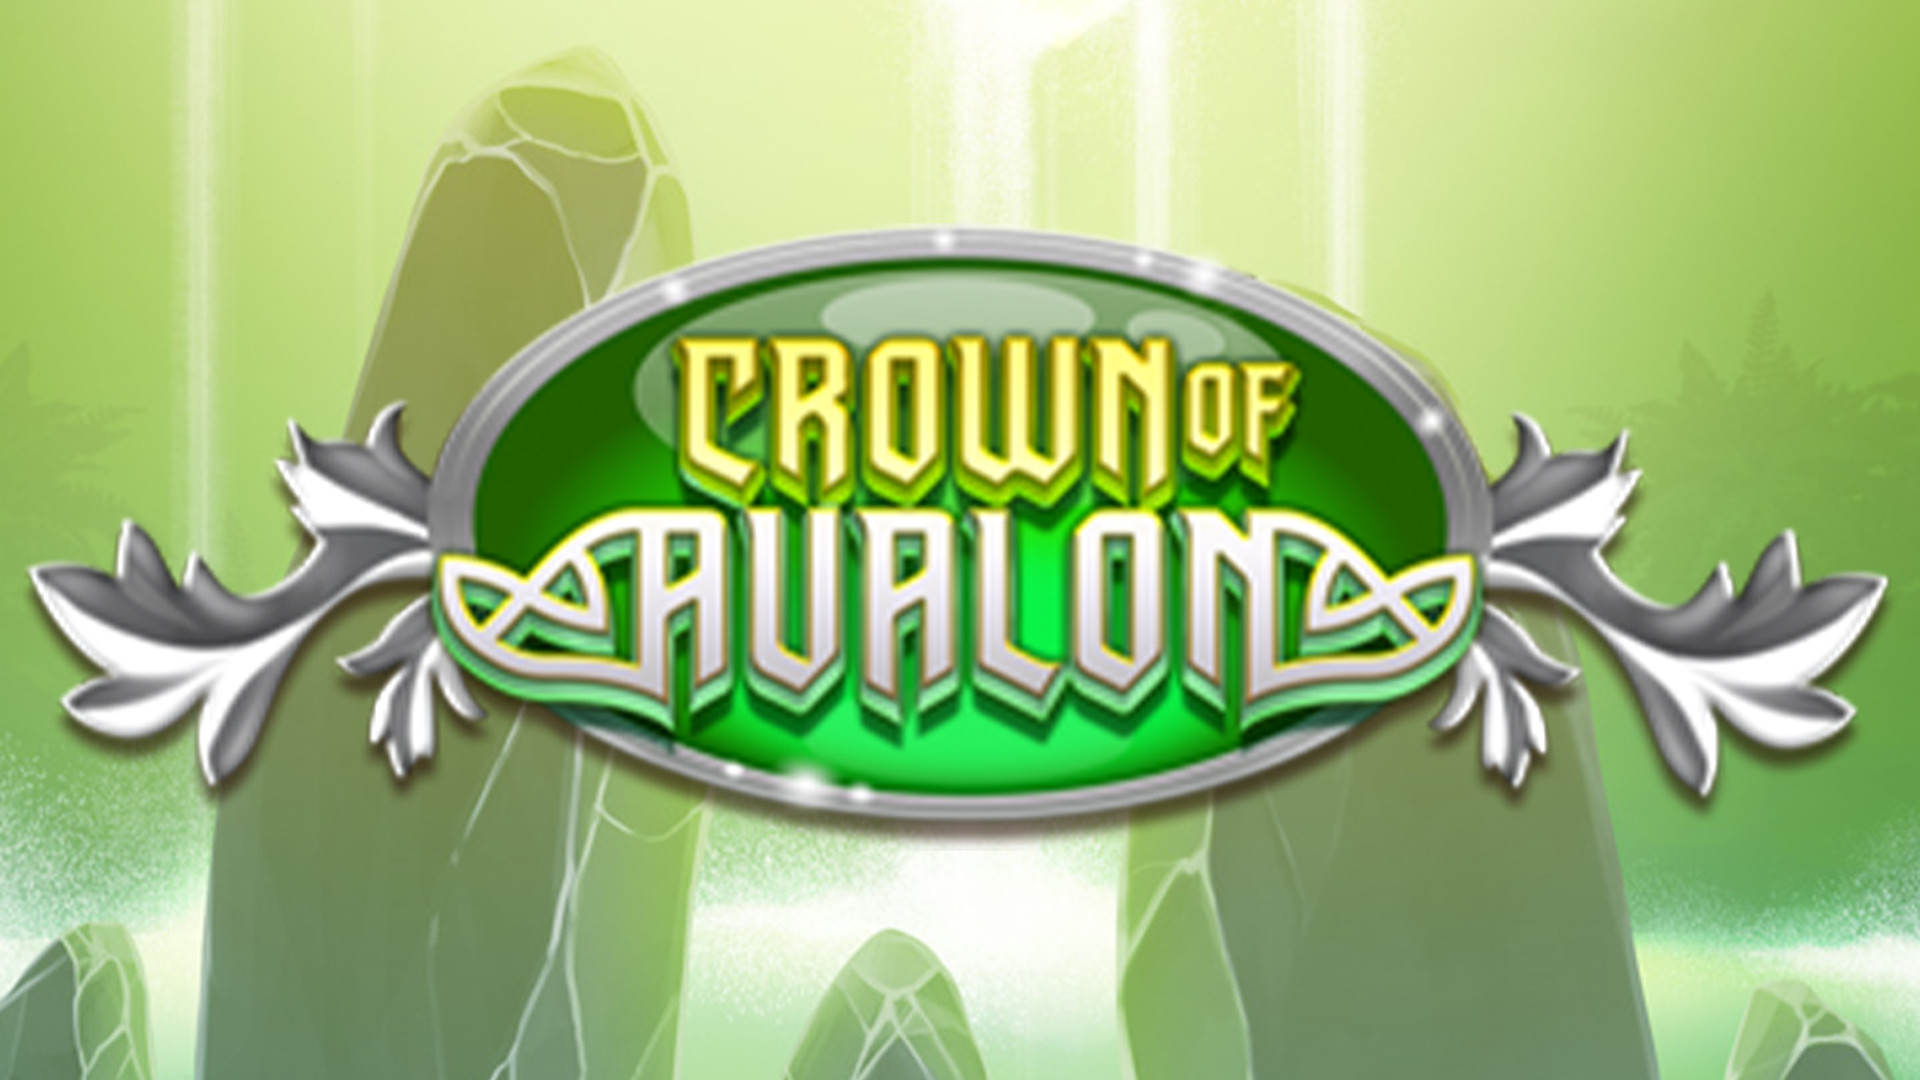 Crown of Avalon